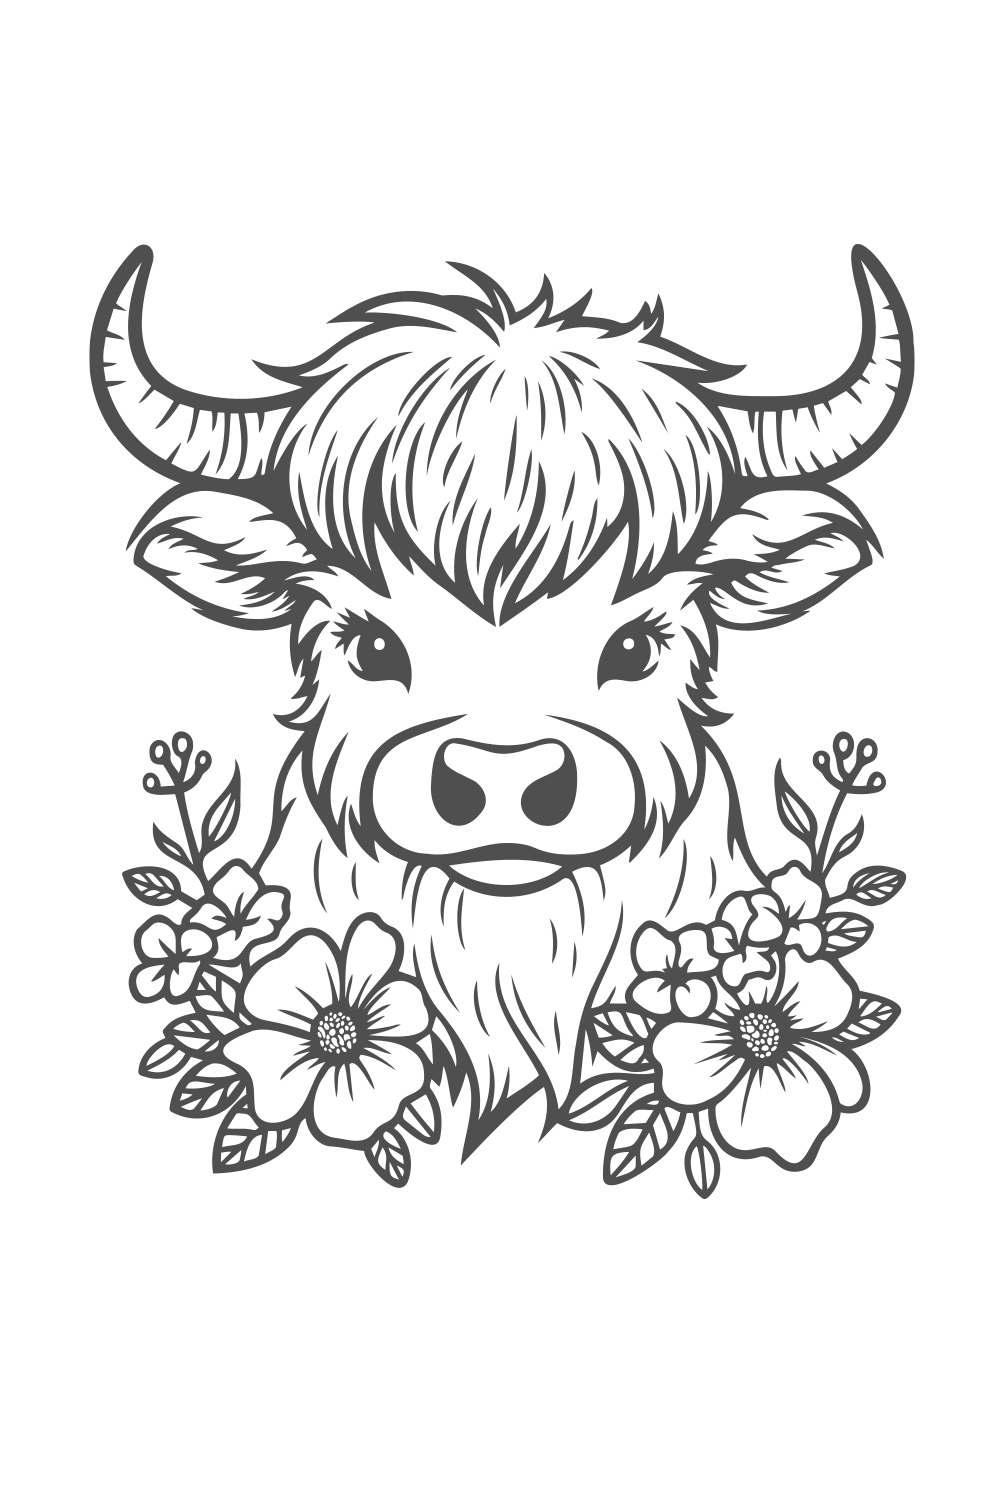 Highland cow T-shirt design pinterest preview image.